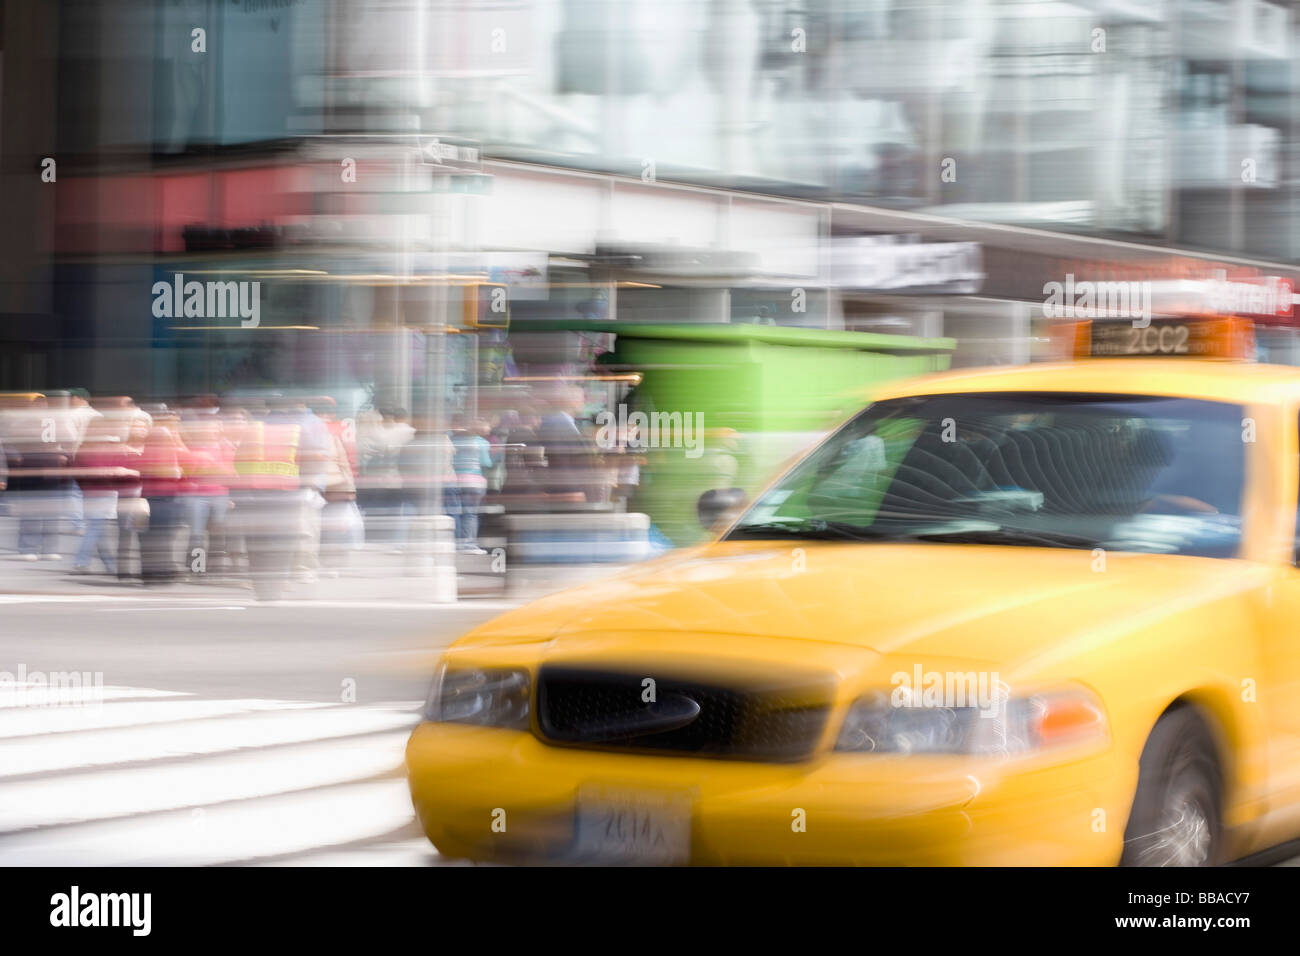 A yellow taxi on a city street, Manhattan, New York City Stock Photo